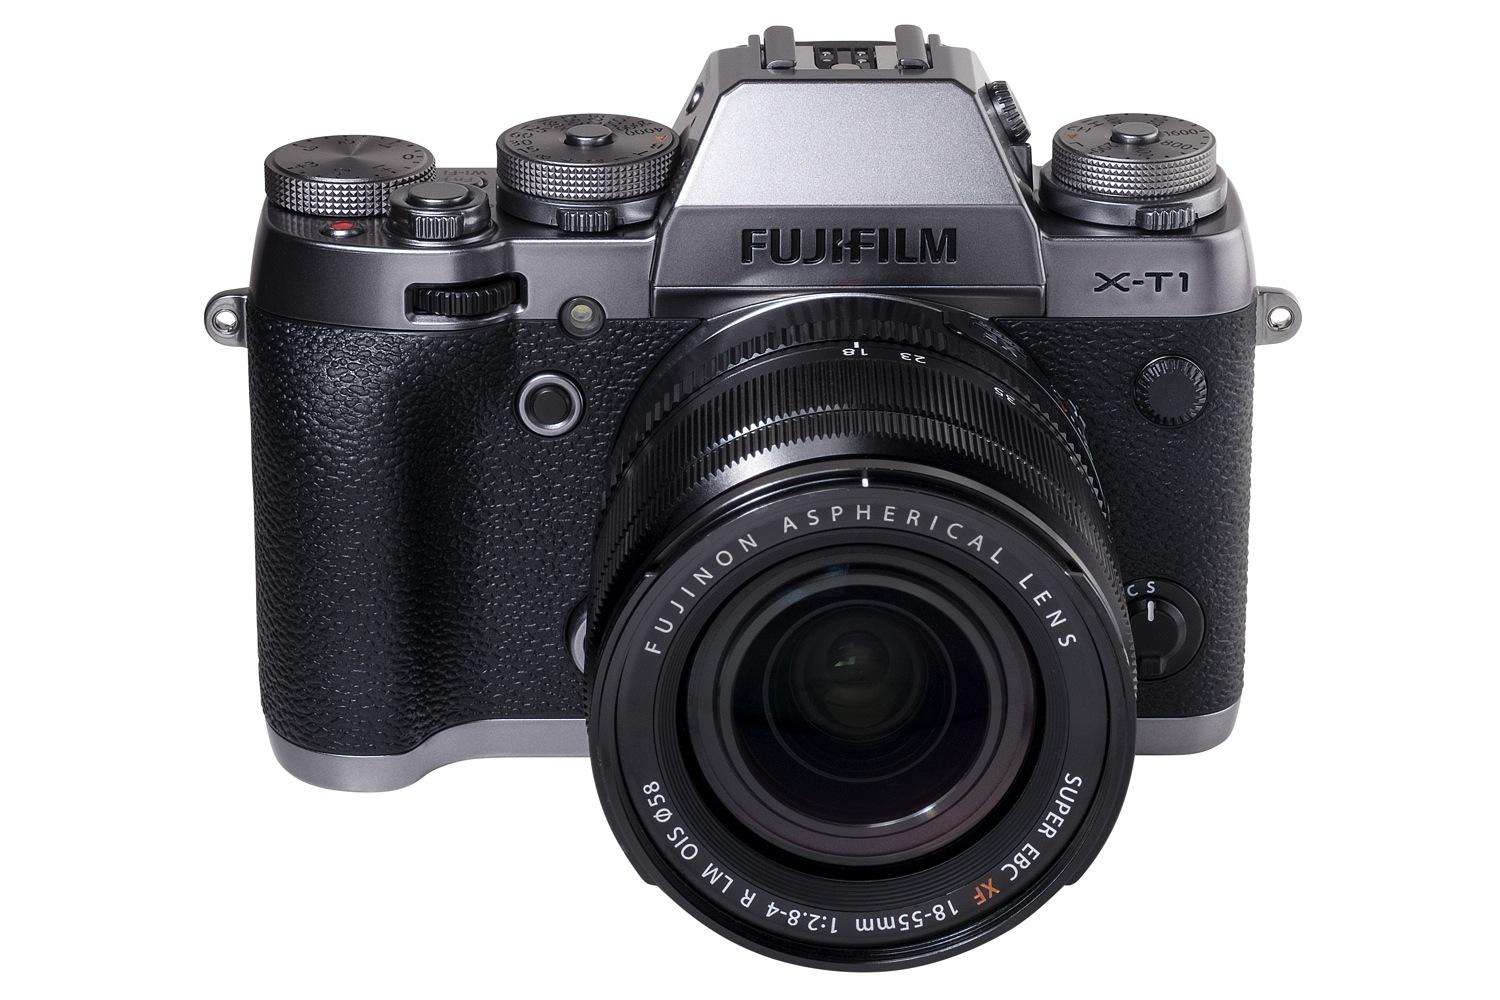 Fujifilm X-T1 Receives a Limited Graphite Silver Body | Digital Trends